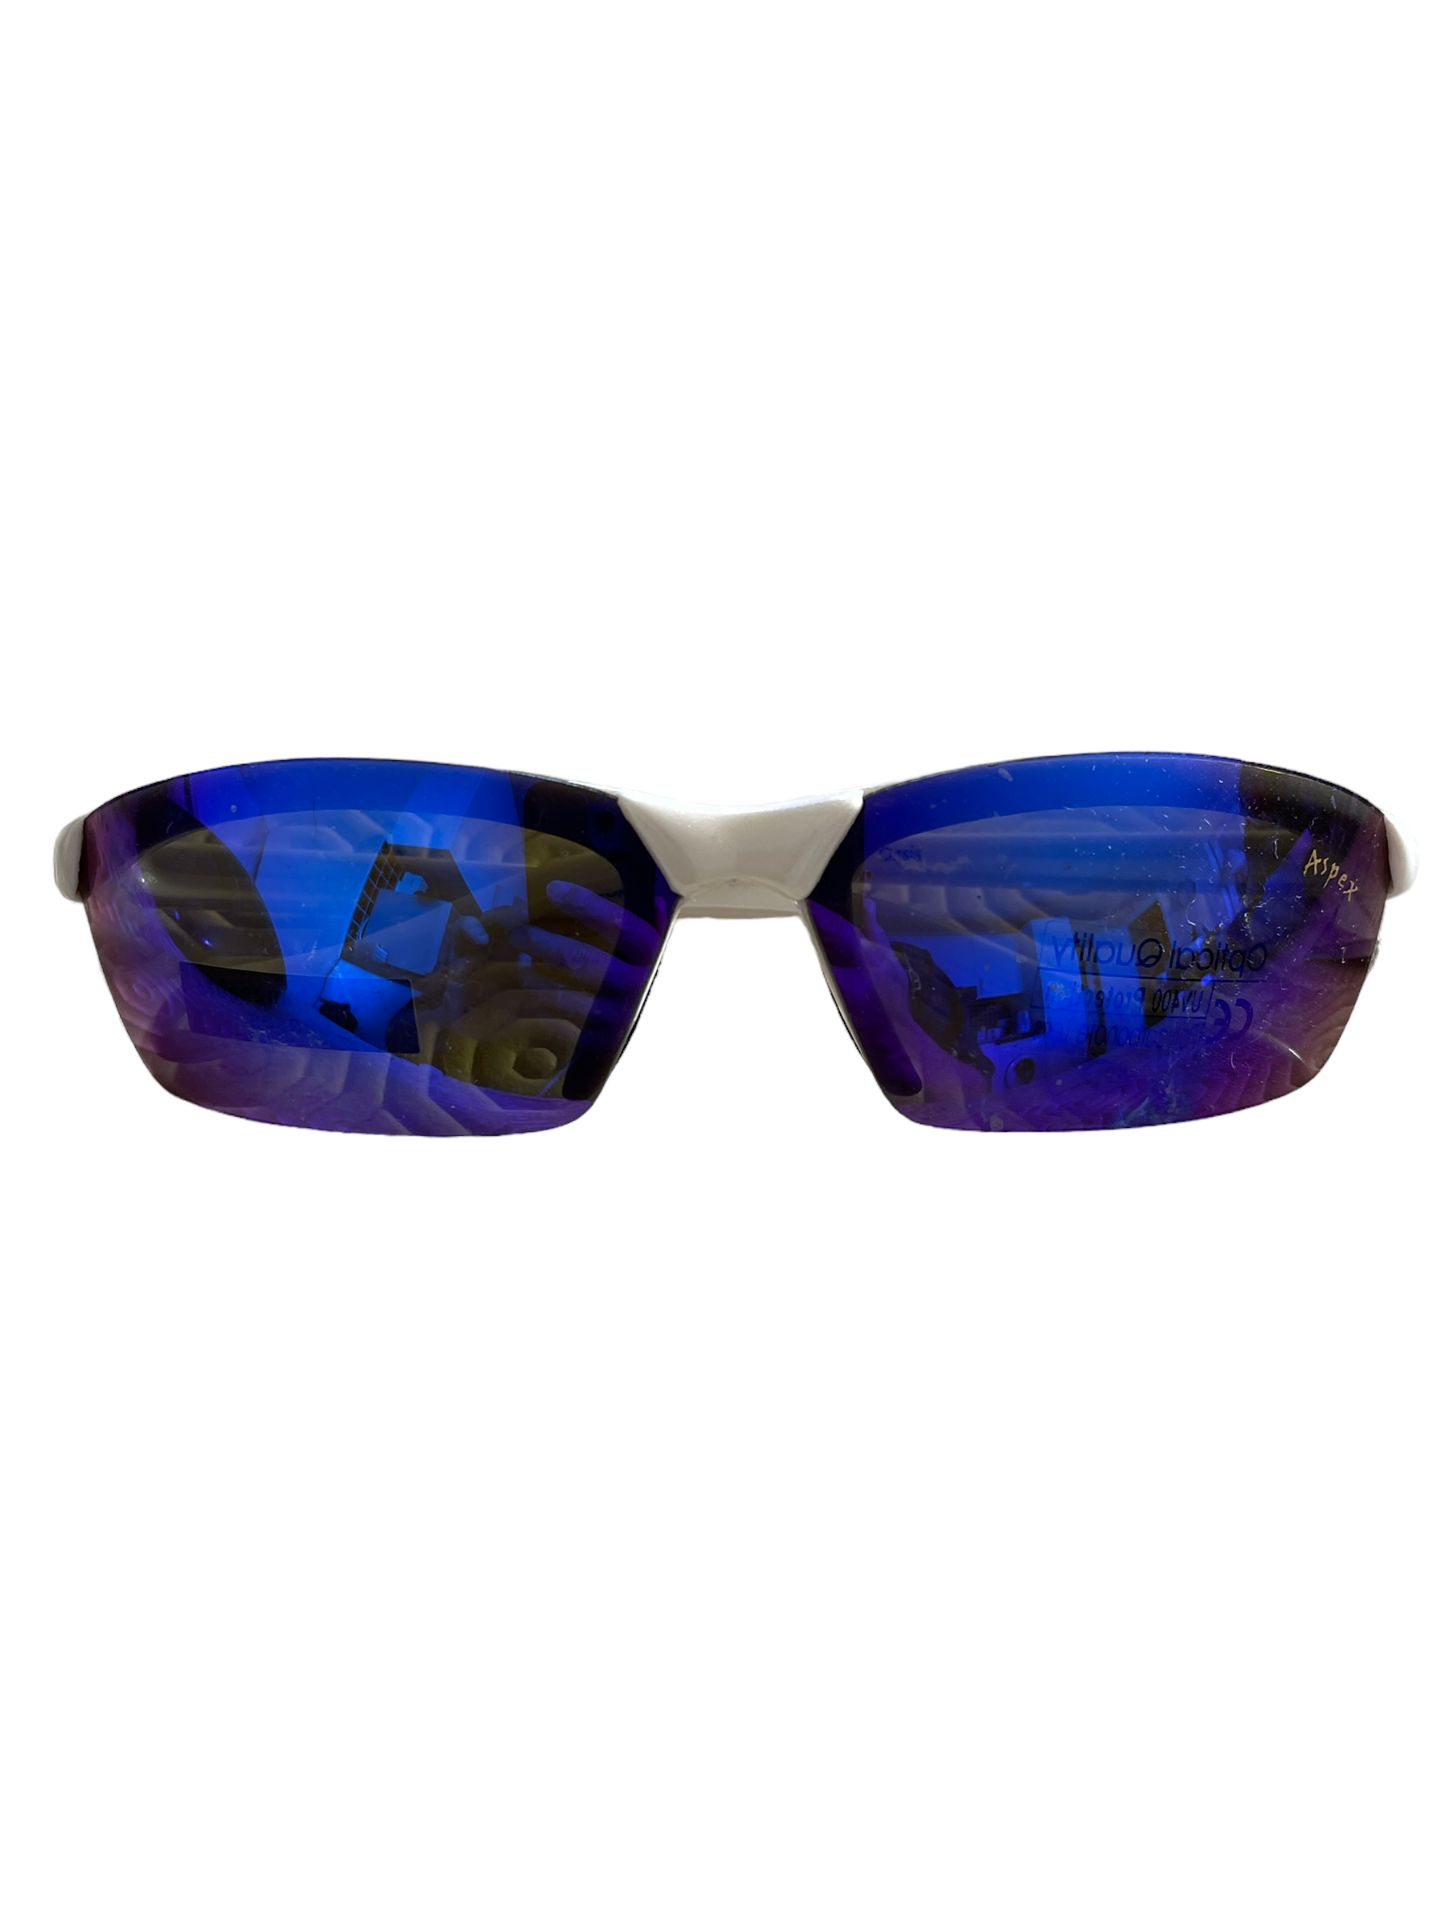 Apex sunglasses blue. - Image 2 of 3